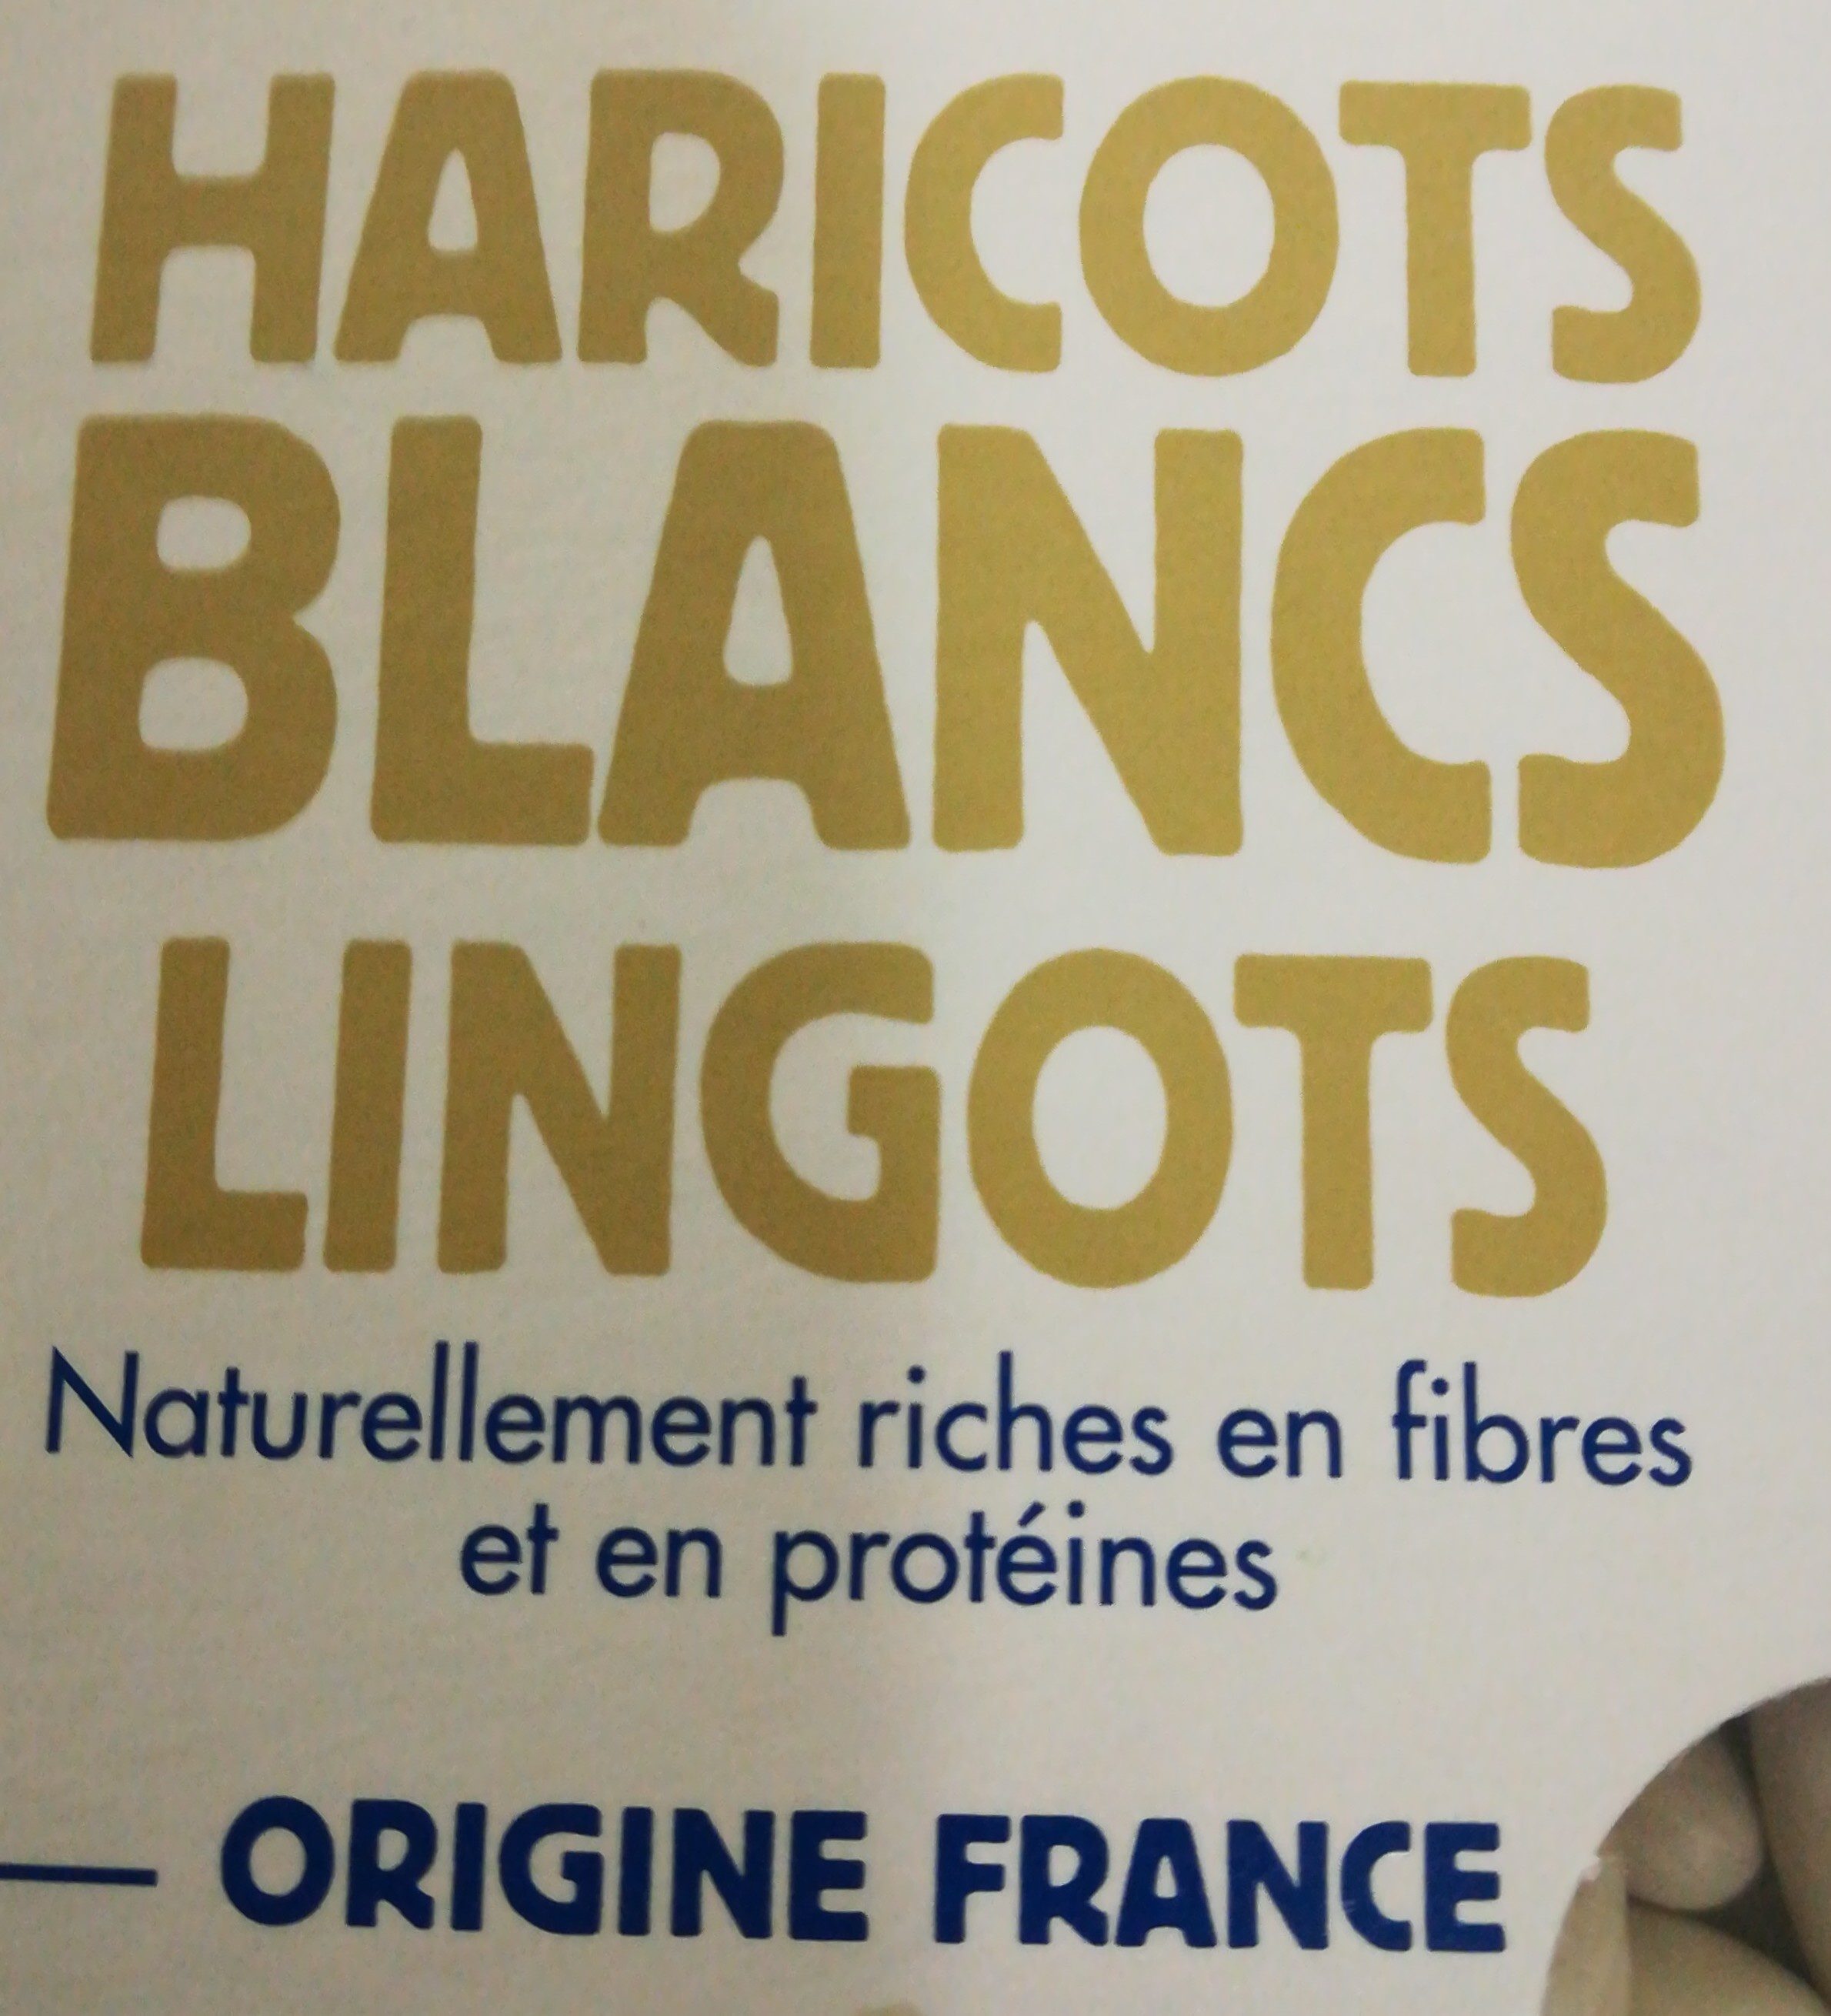 Haricots blancs Lingots France - Ingrediënten - fr